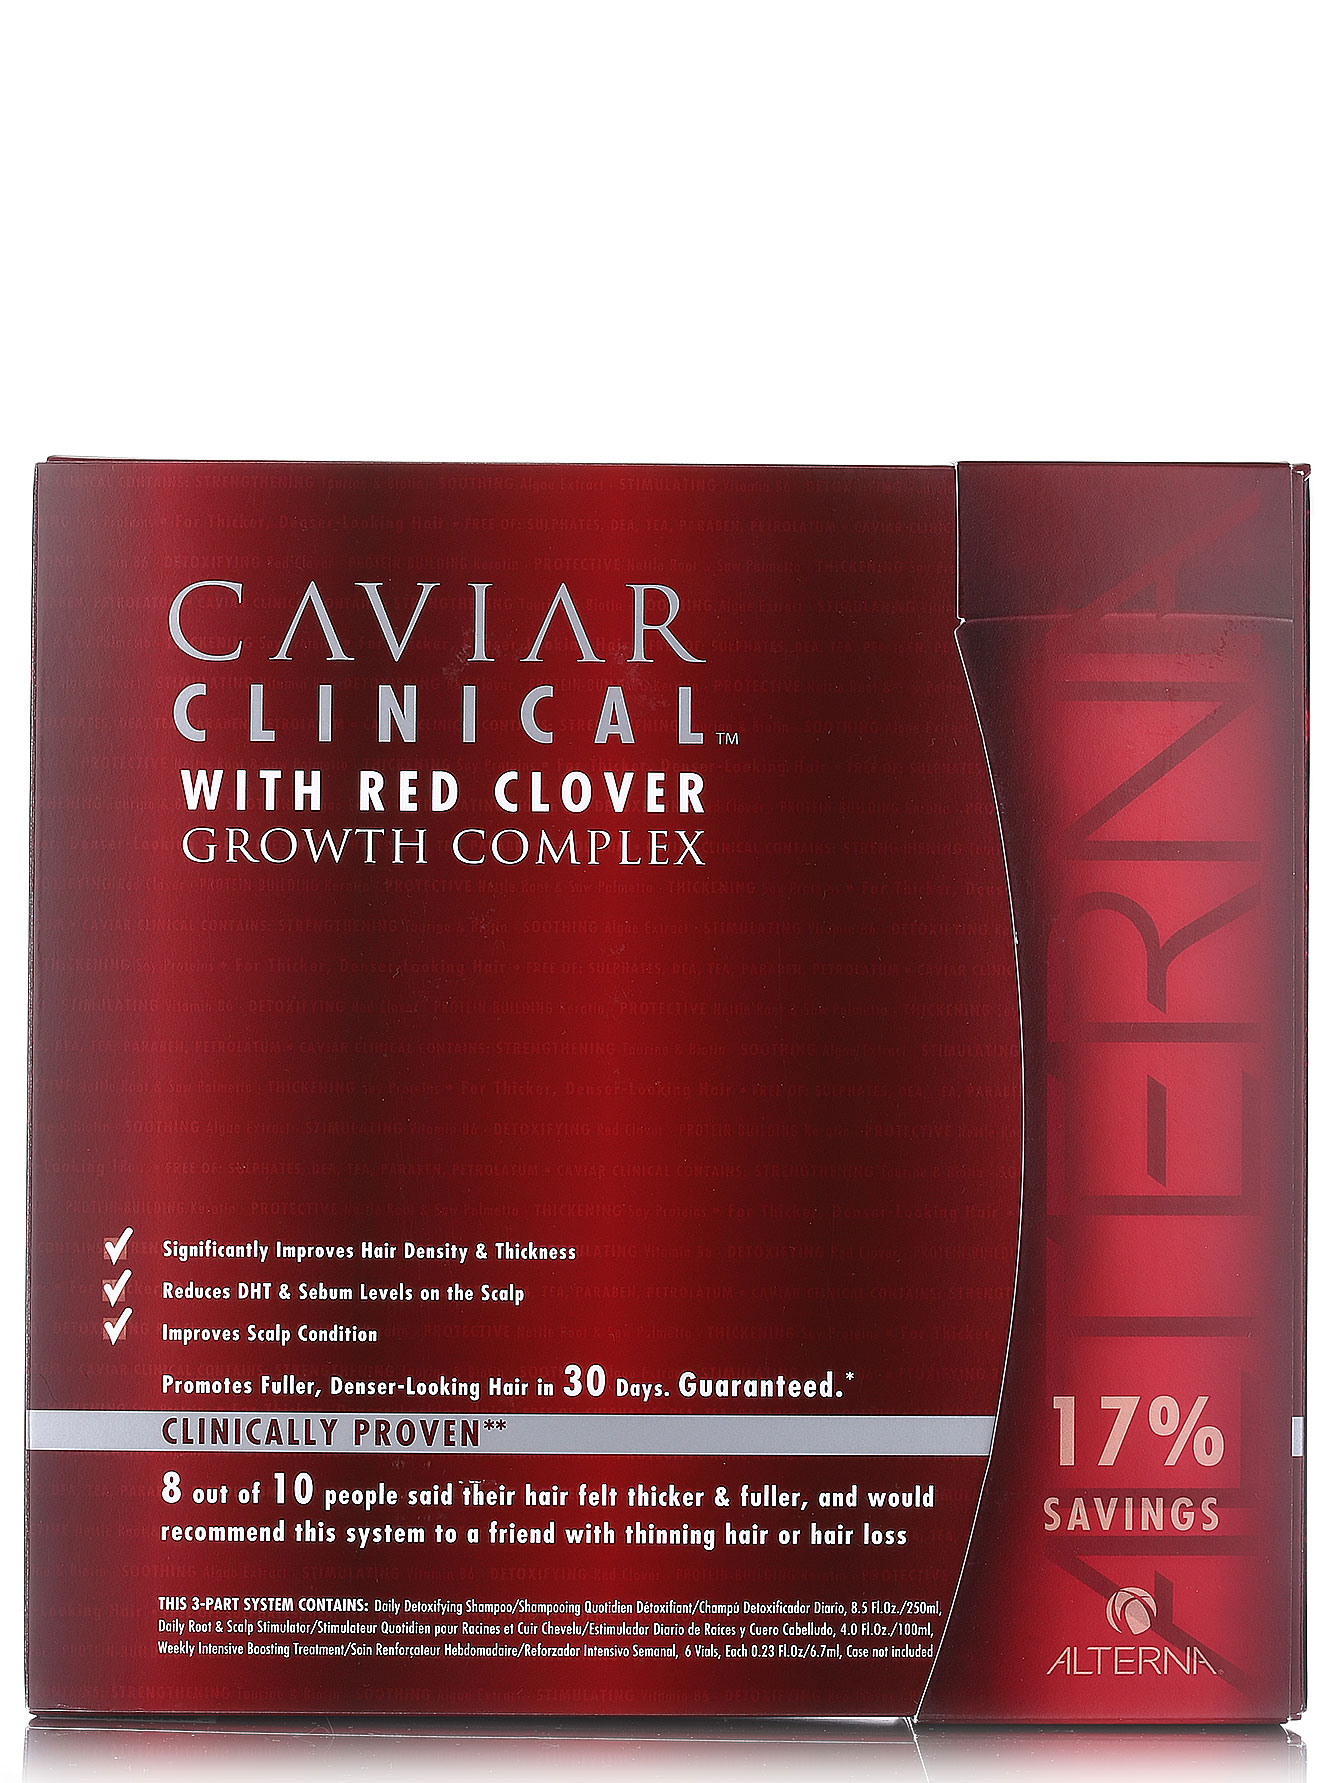  Набор по уходу за волосами - 3-Part System Caviar - Общий вид